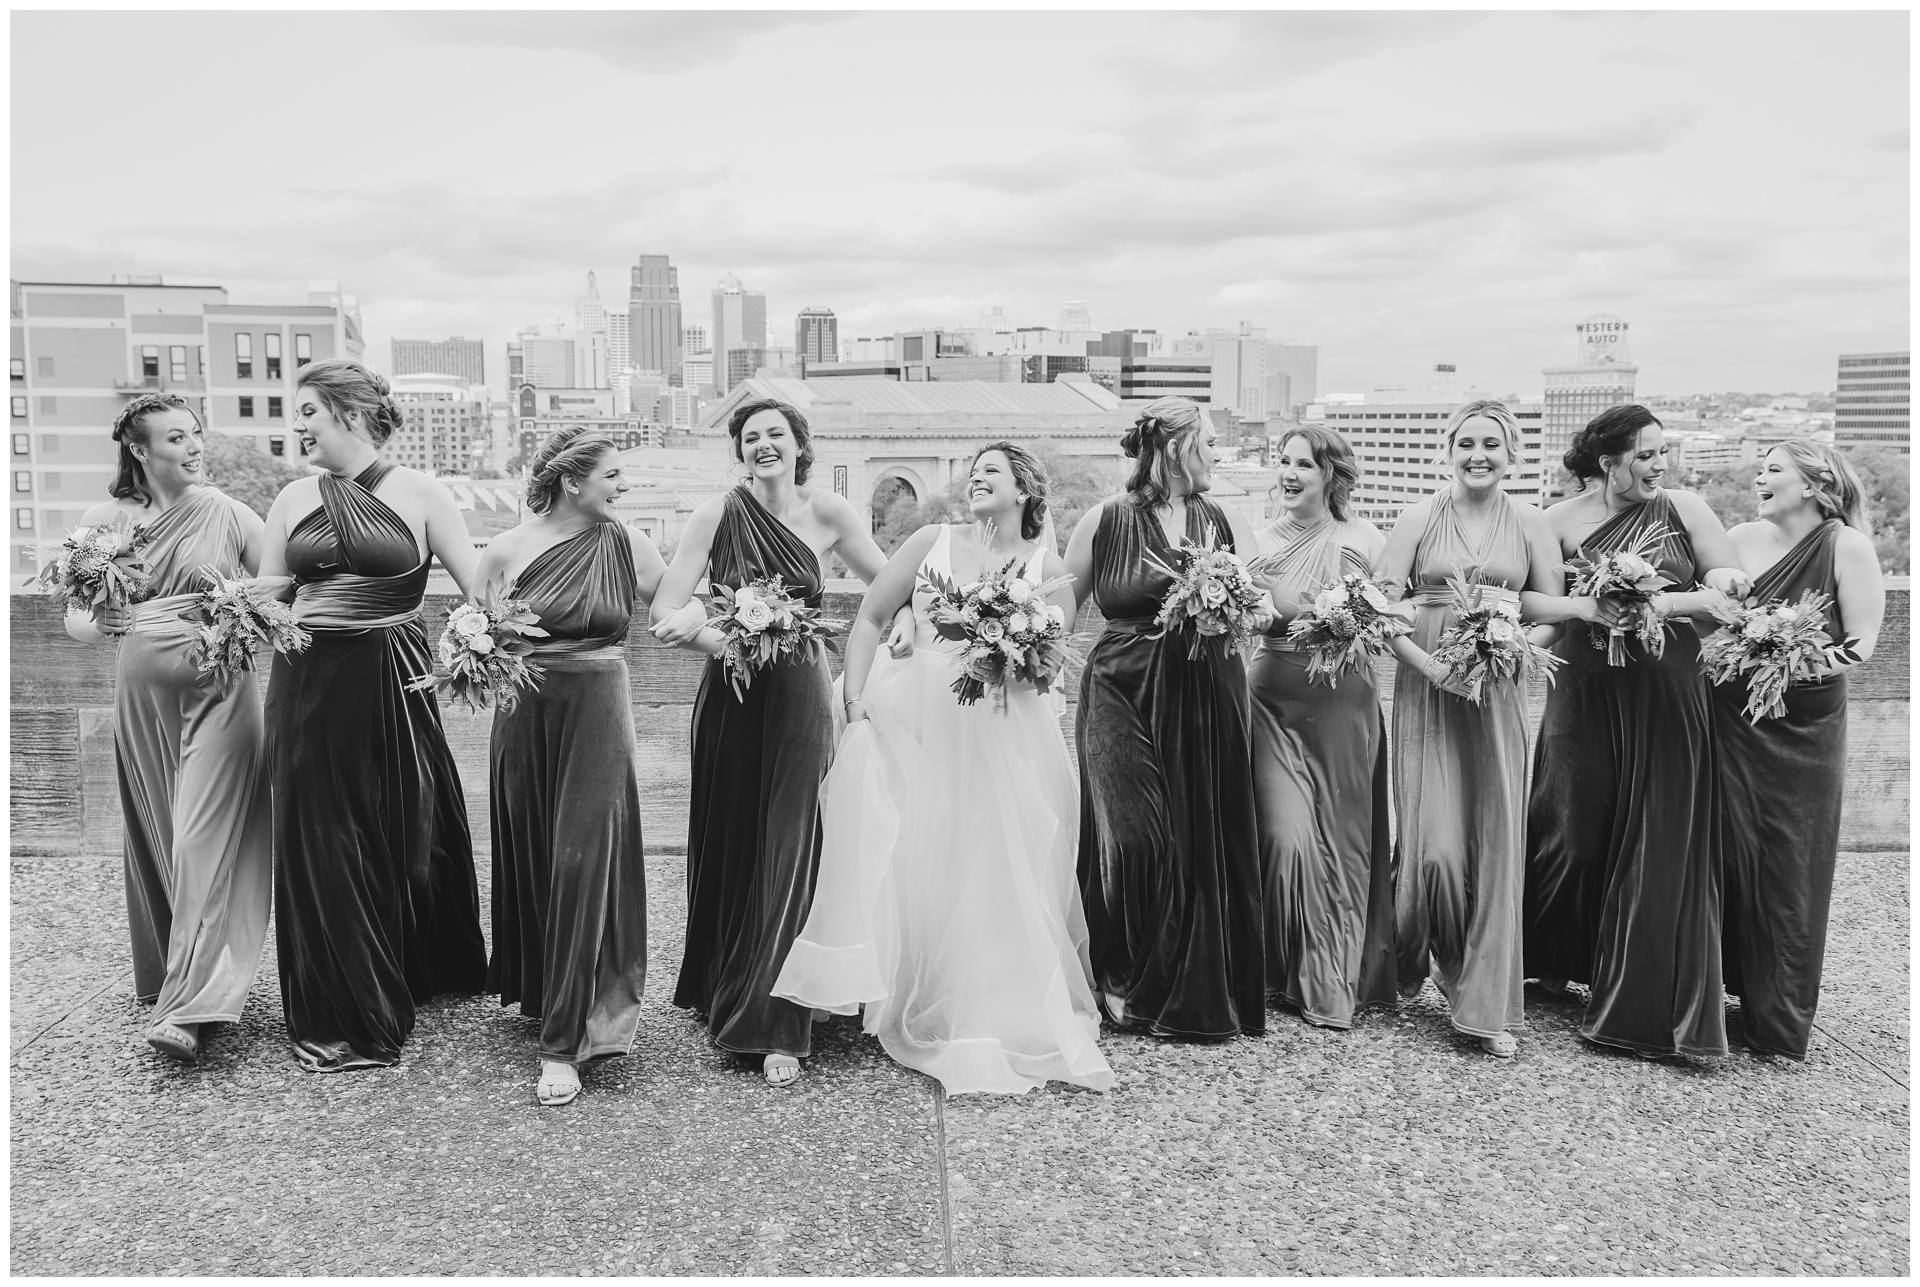 Wedding photography at Liberty Memorial by Kansas City wedding photographers Wisdom-Watson Weddings.